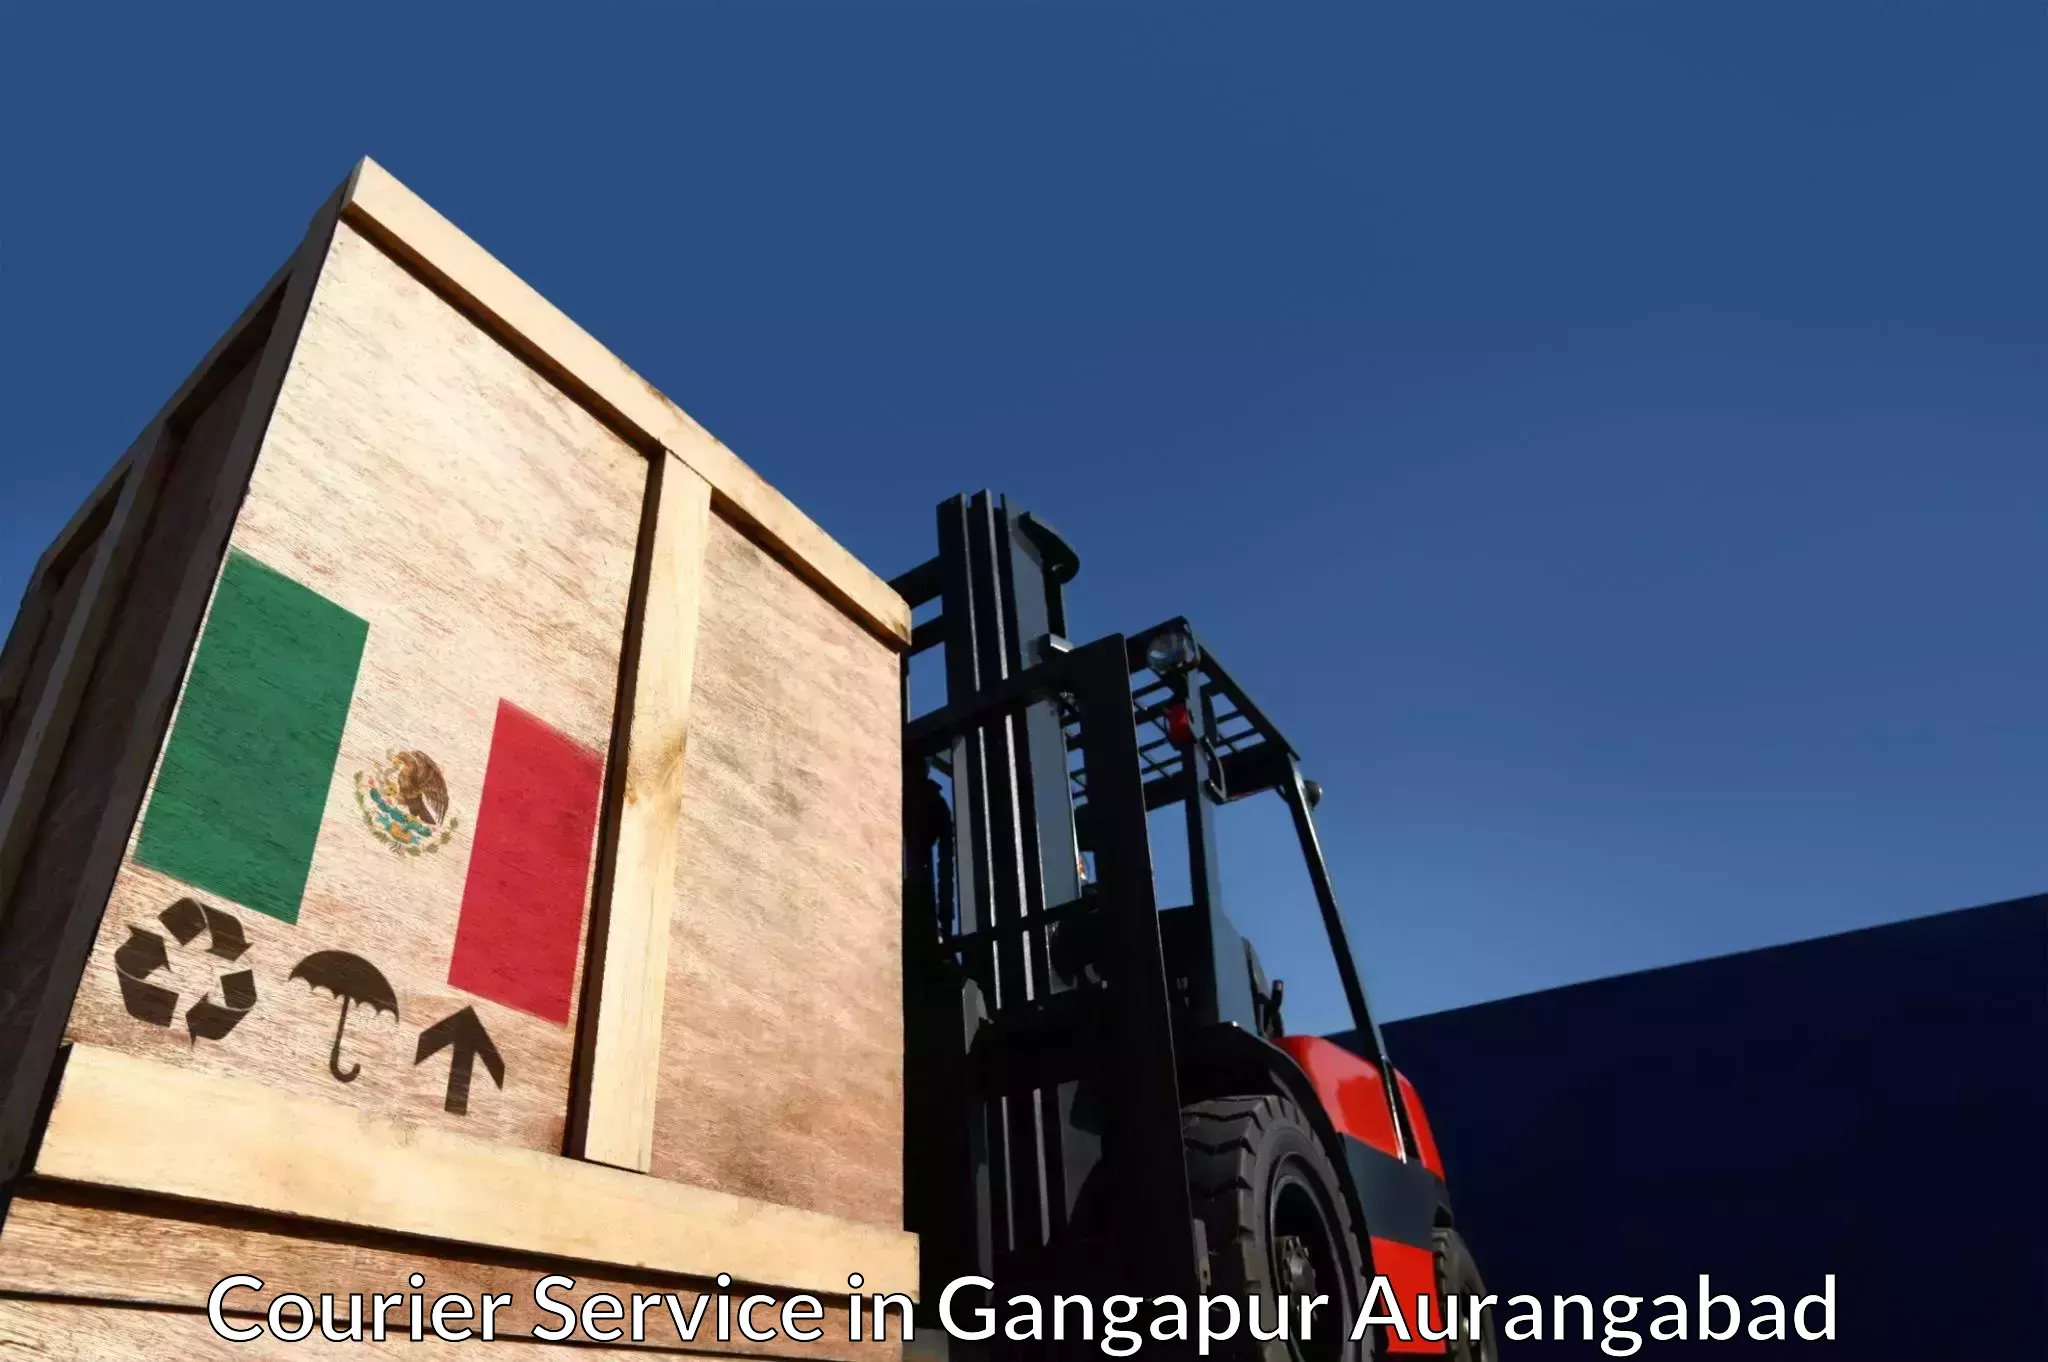 Logistics efficiency in Gangapur Aurangabad